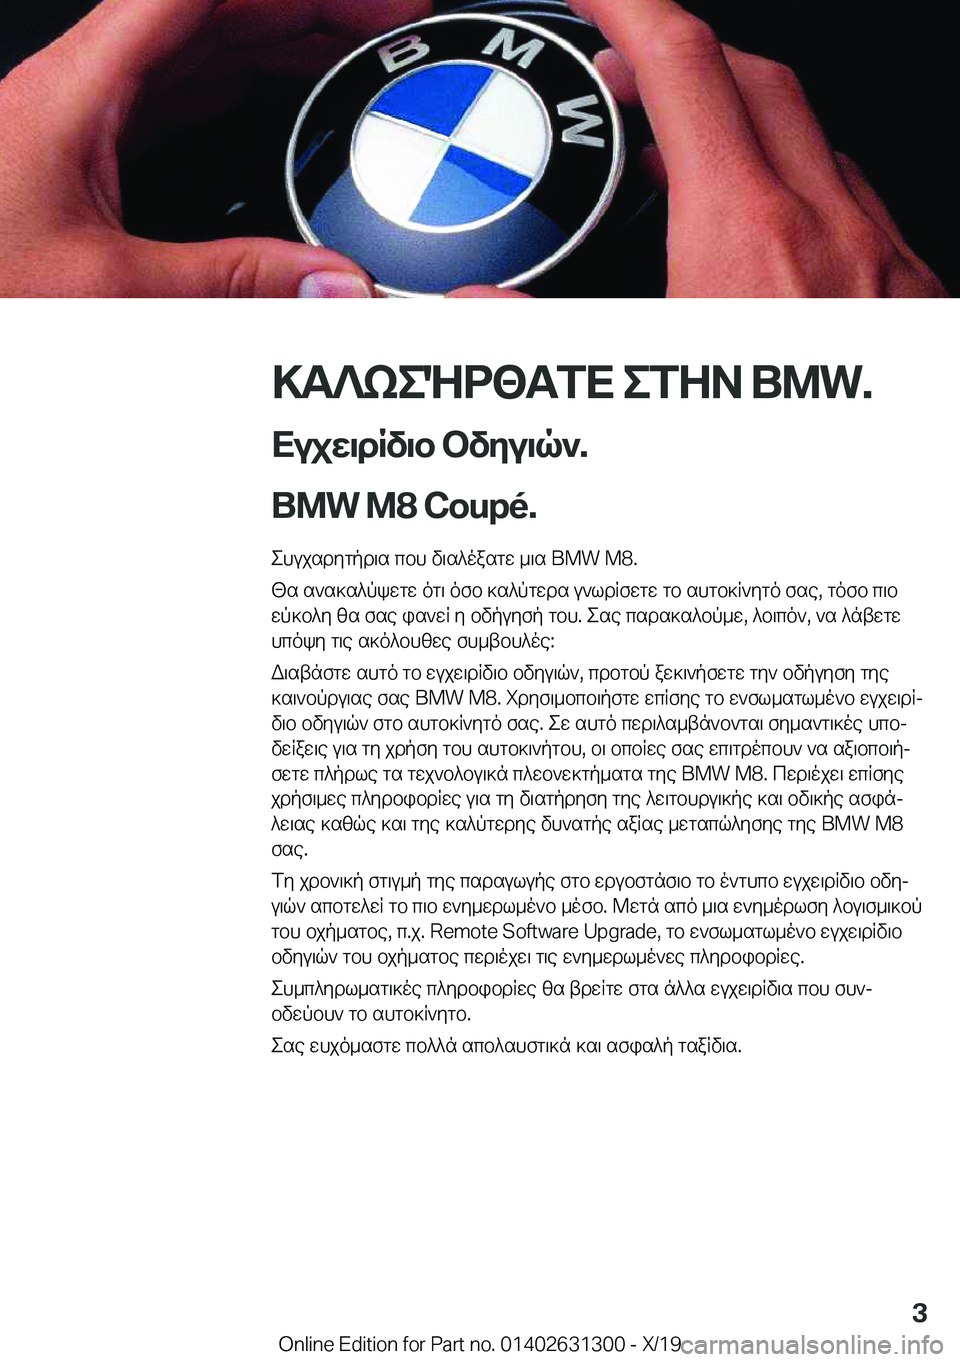 BMW M8 2020  ΟΔΗΓΌΣ ΧΡΉΣΗΣ (in Greek) >T?keNd<TfX�efZA��B�M�W�.
Xujw\dRv\b�bvyu\q`�.
�B�M�W��M�8��C�o�u�p�